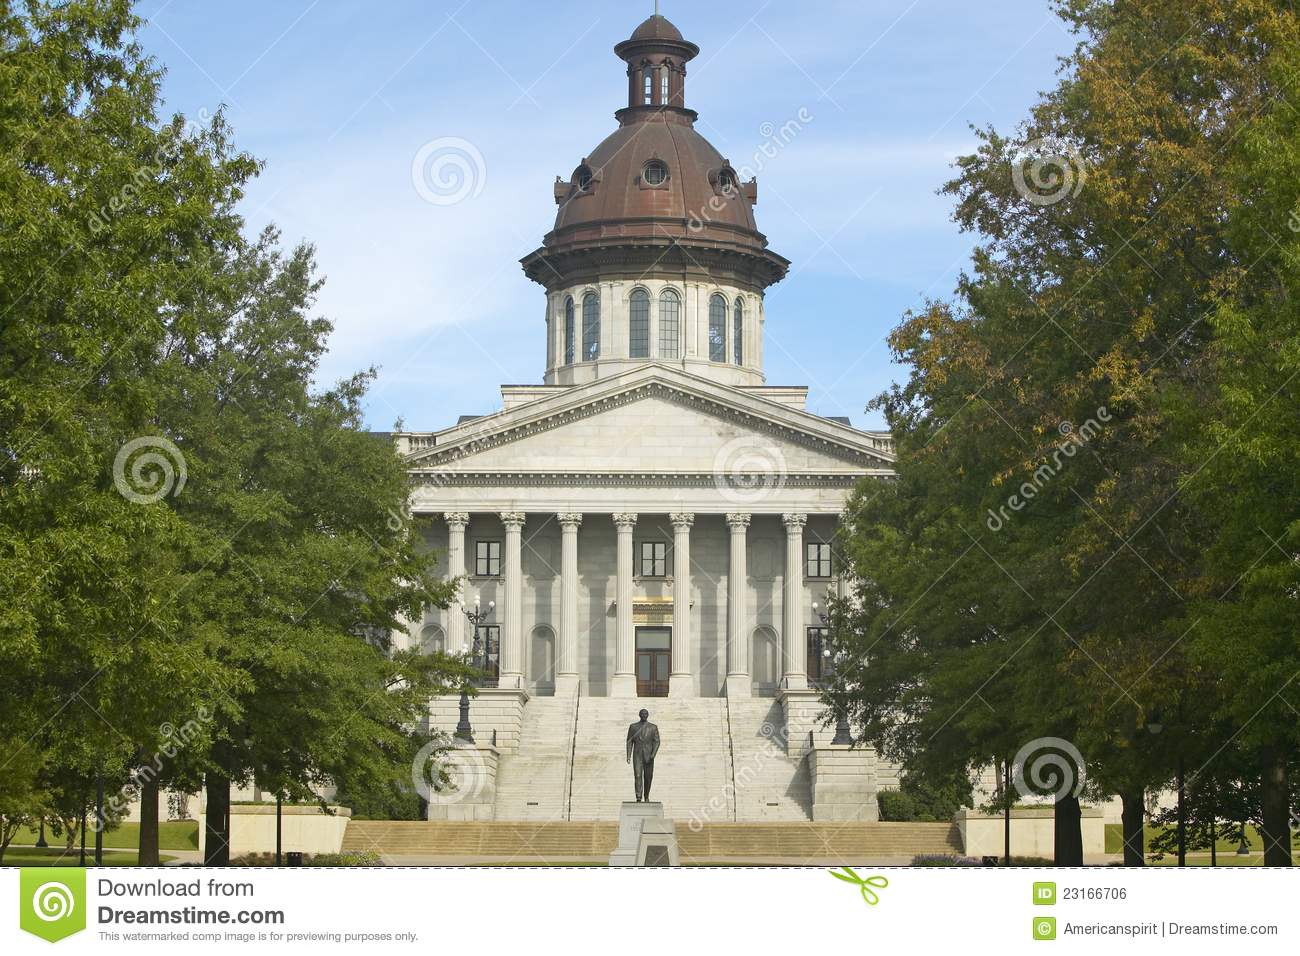 State Capitol Of South Carolina Royalty Free Stock Image   Image    